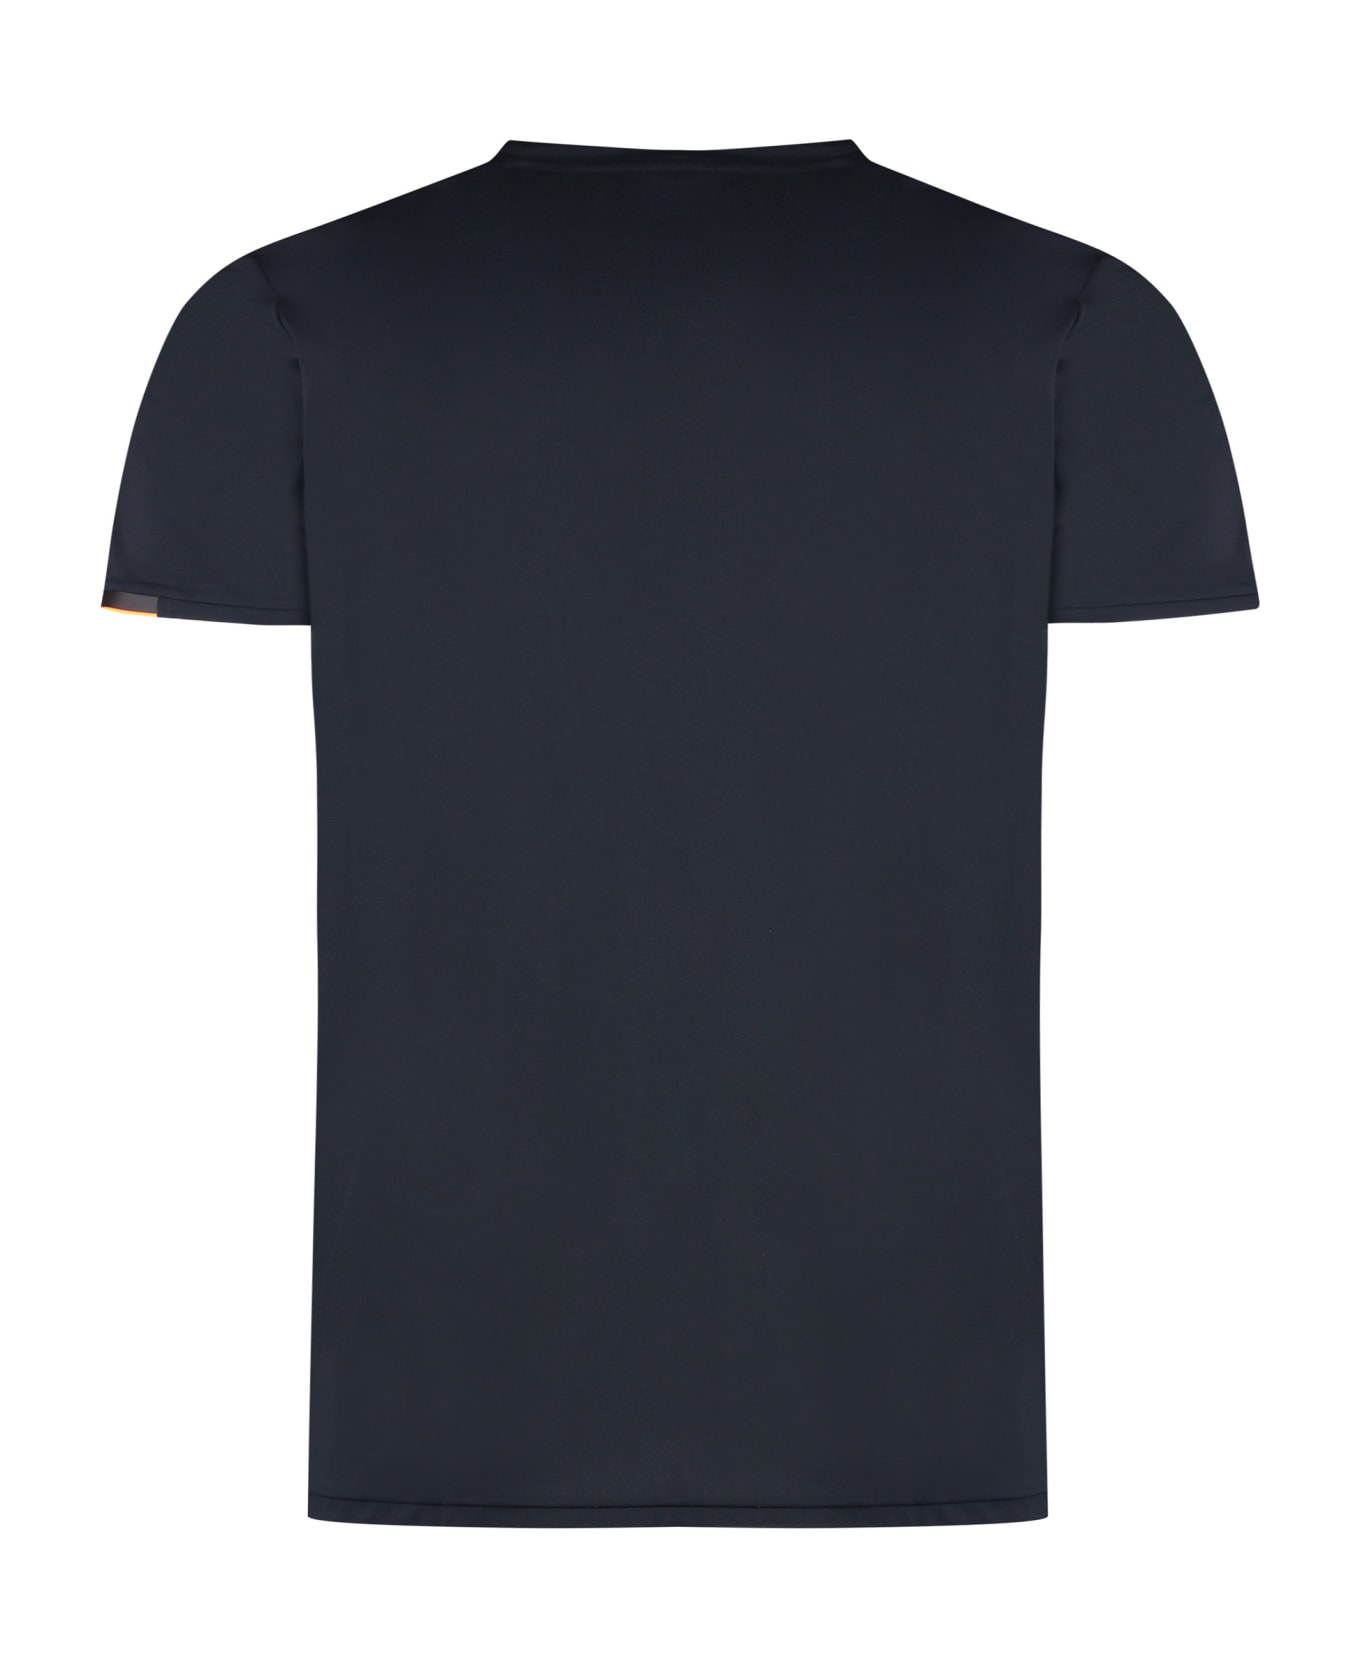 RRD - Roberto Ricci Design Oxford Techno Fabric T-shirt T-Shirt - BLUE BLACK シャツ